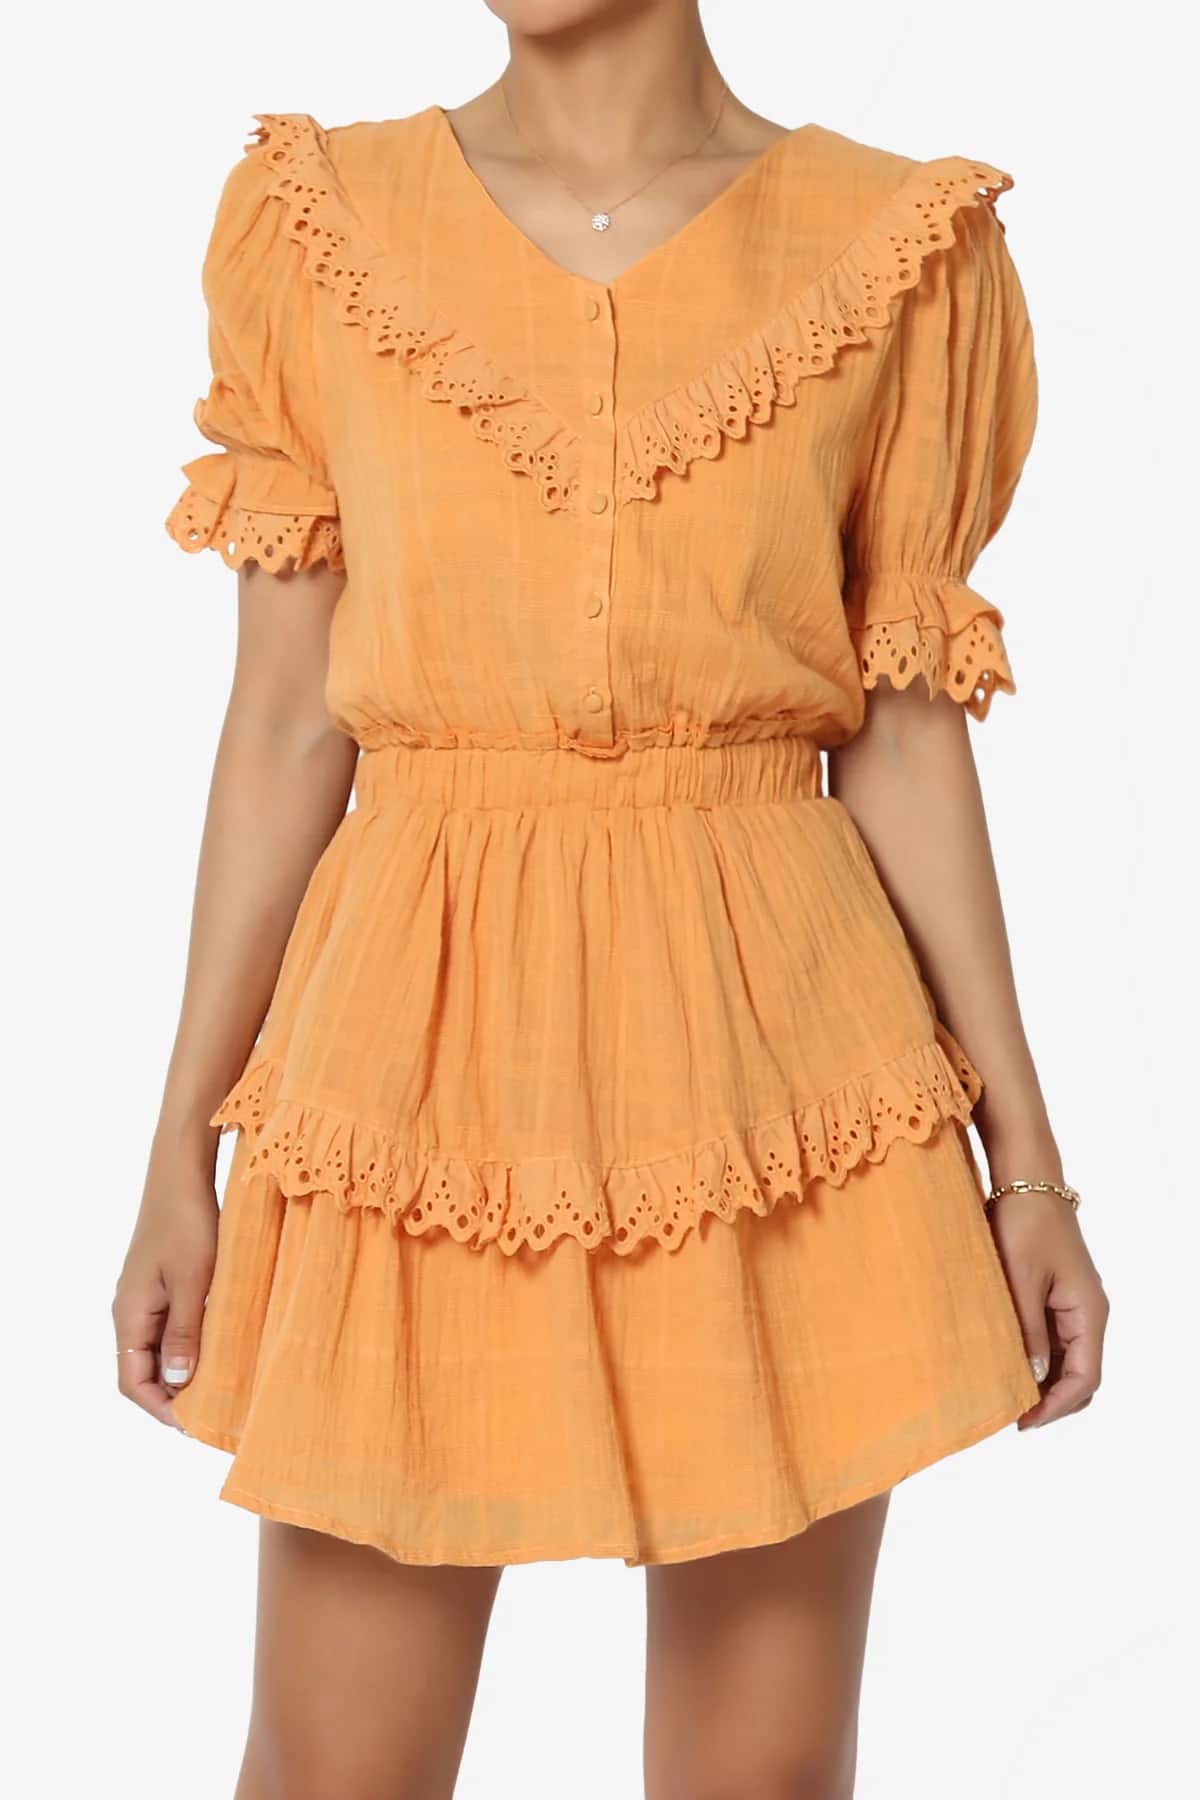 A woman wearing a short orange dress